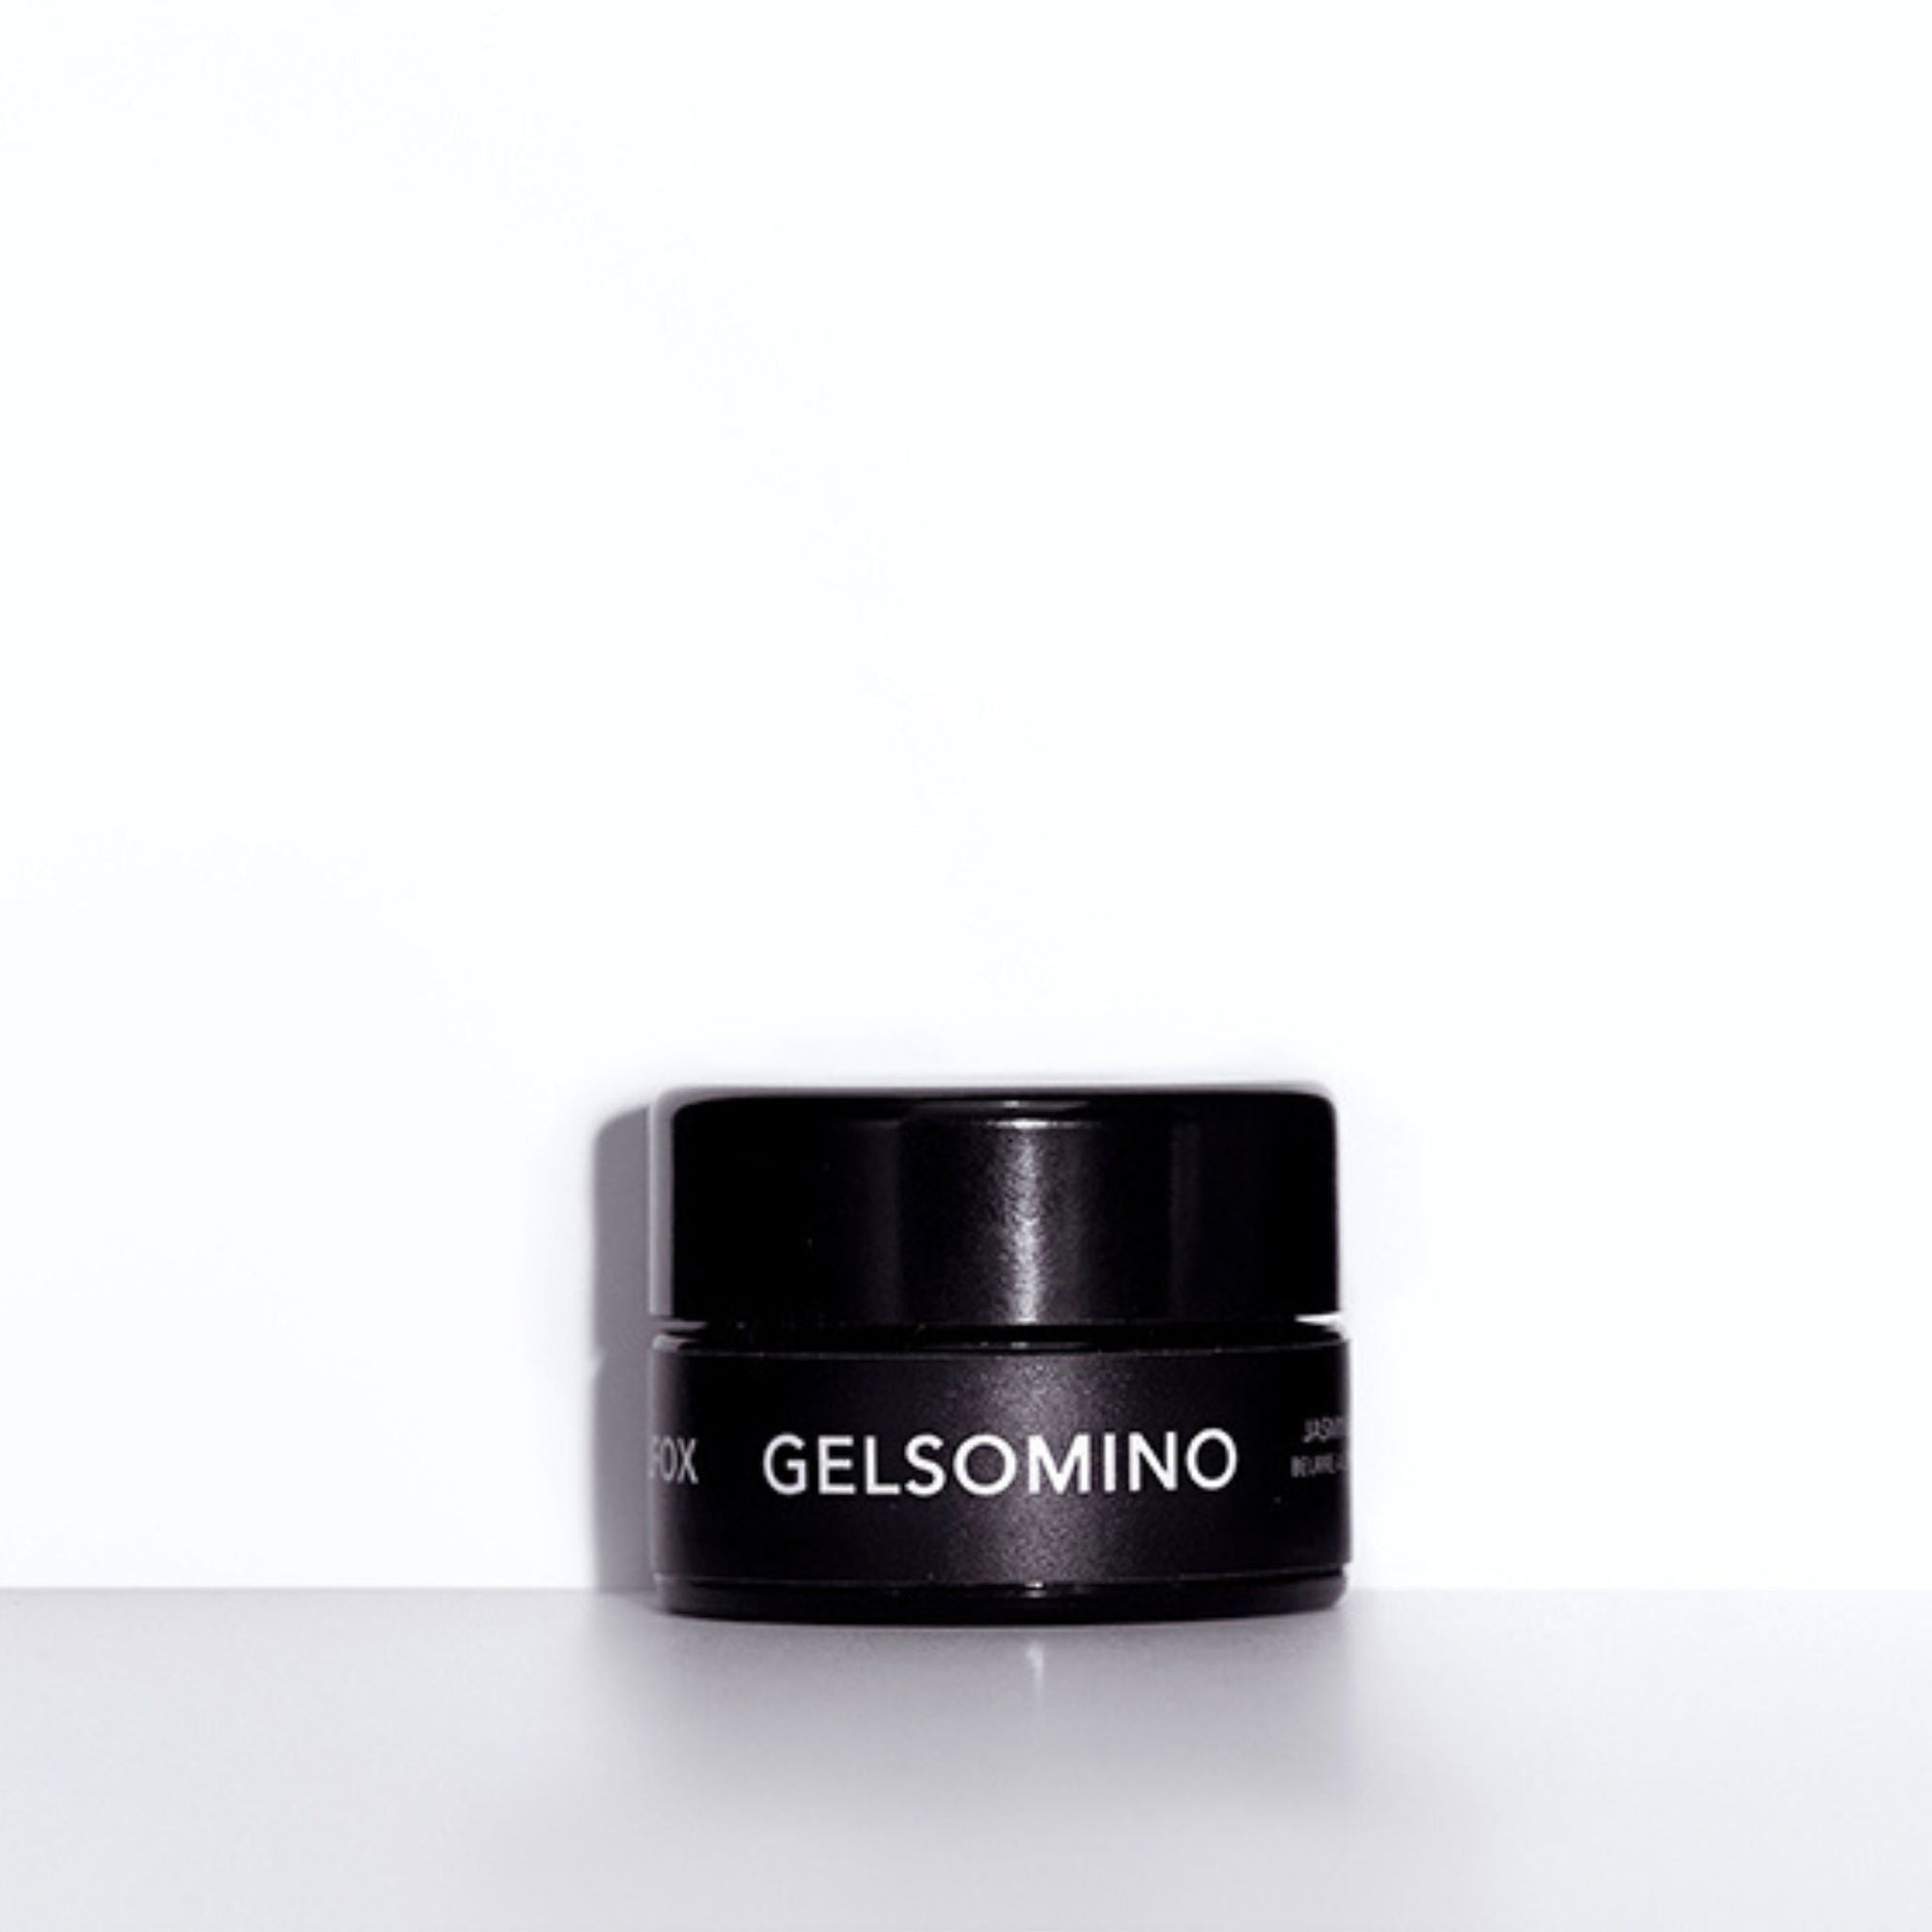 Lilfox - LILFOX GELSOMINO Jasmine Luxury Lip Butter - ORESTA clean beauty simplified